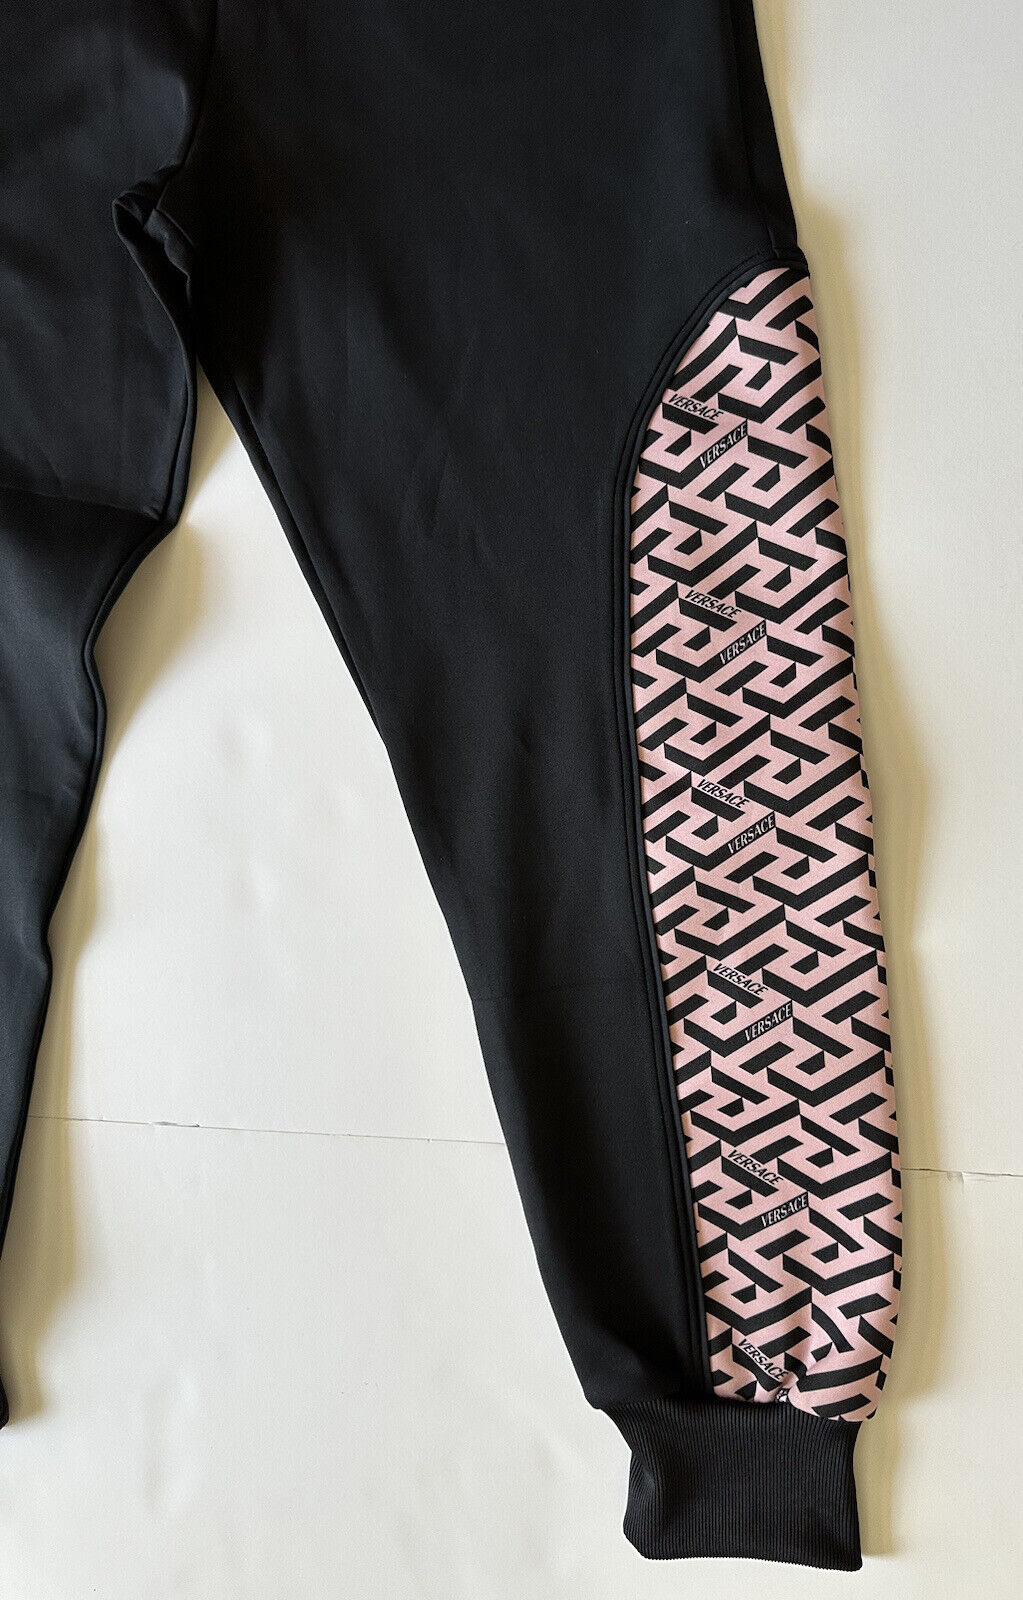 NWT $625 Versace Women's Black Greca Print Jogger Pants Size 4 Italy 1002081